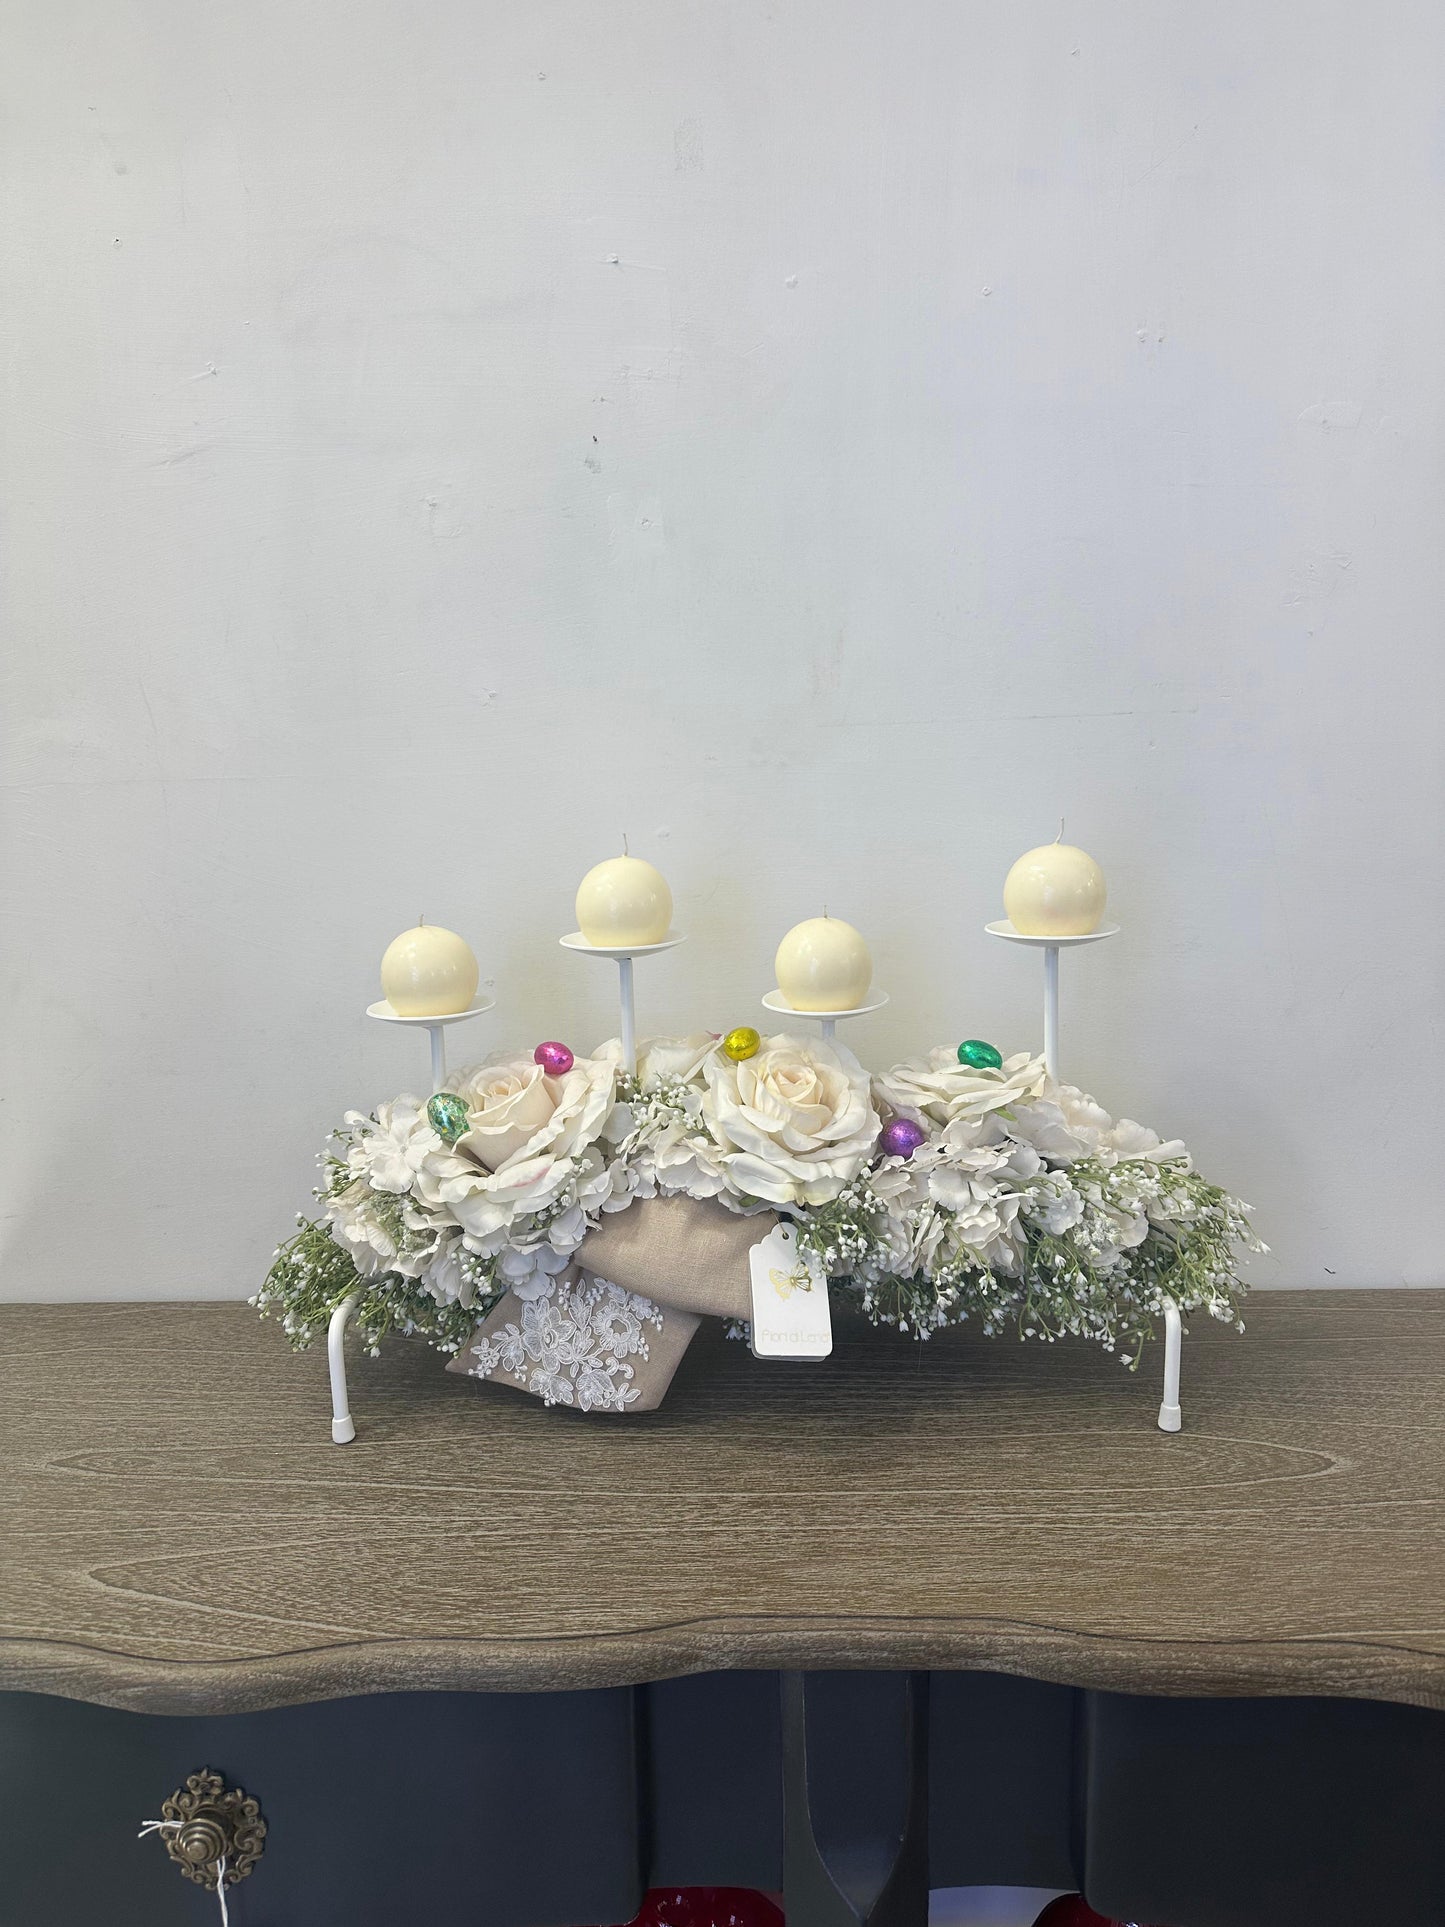 Centro tavola floreale pasquale con candele